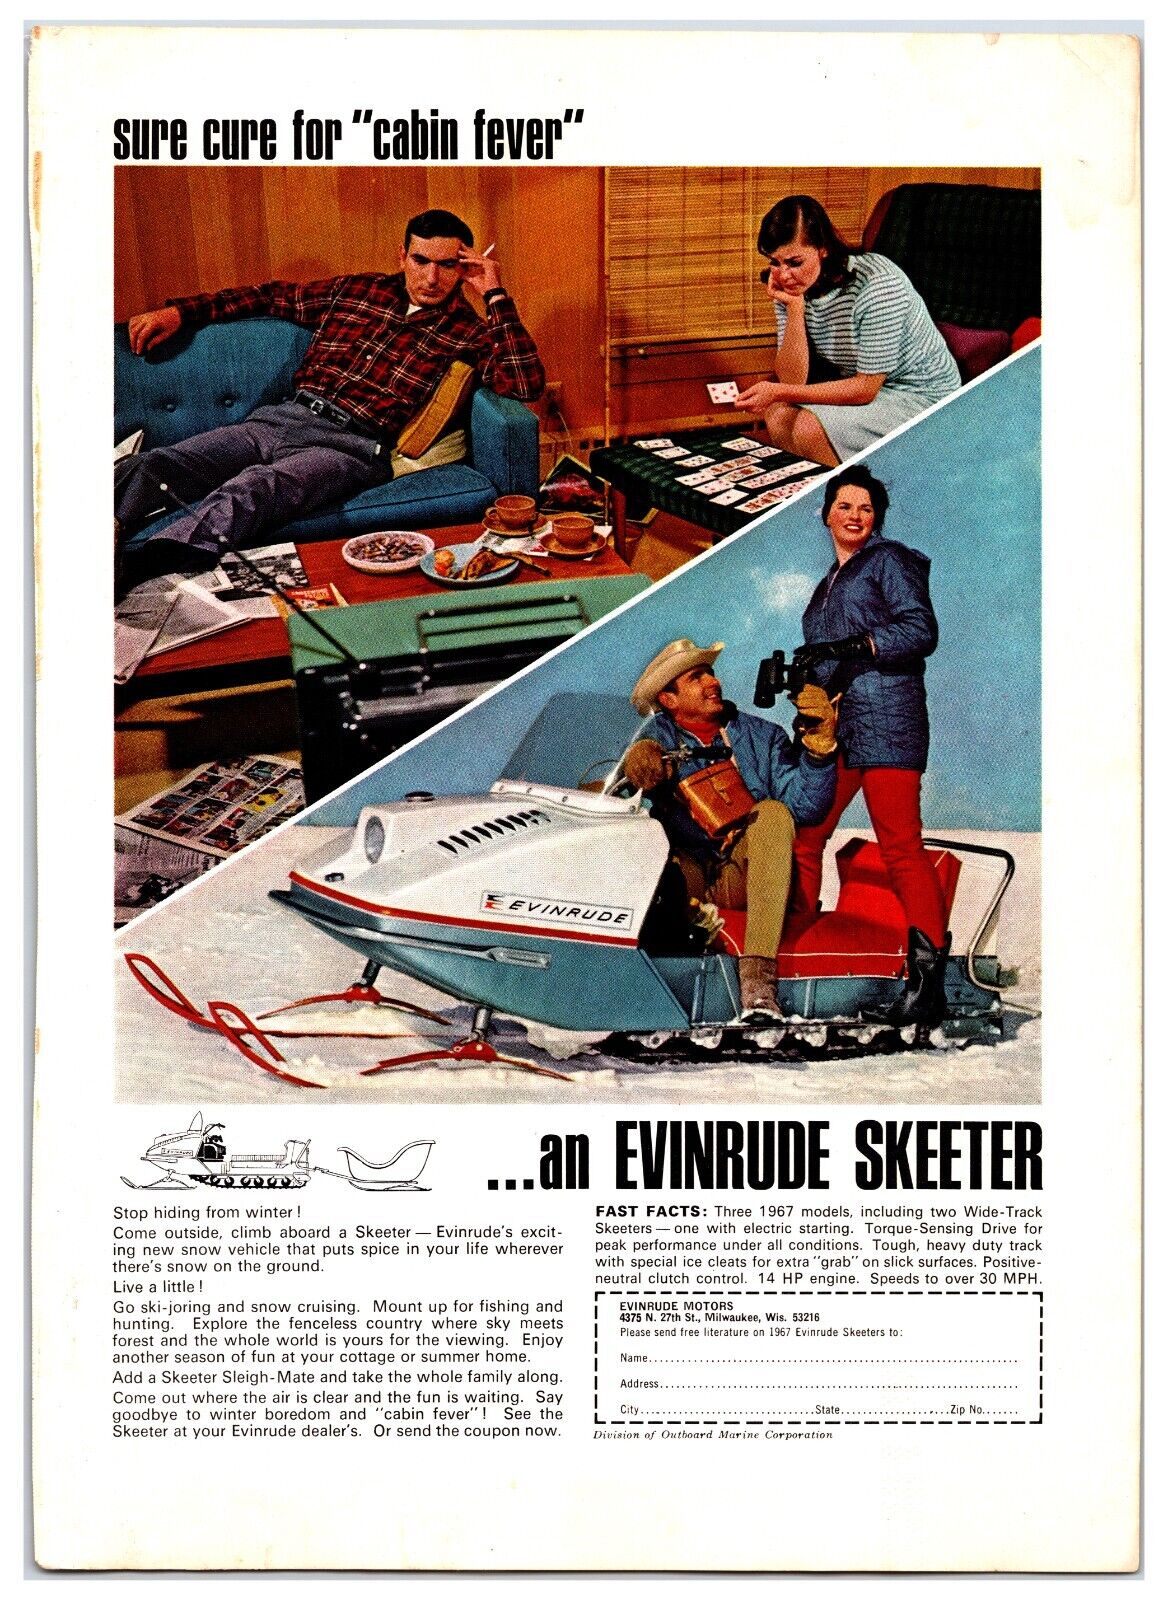 1967 Evinrude Skeeter Snowmobile - Original Print Advertisement (6.5in x 9in)